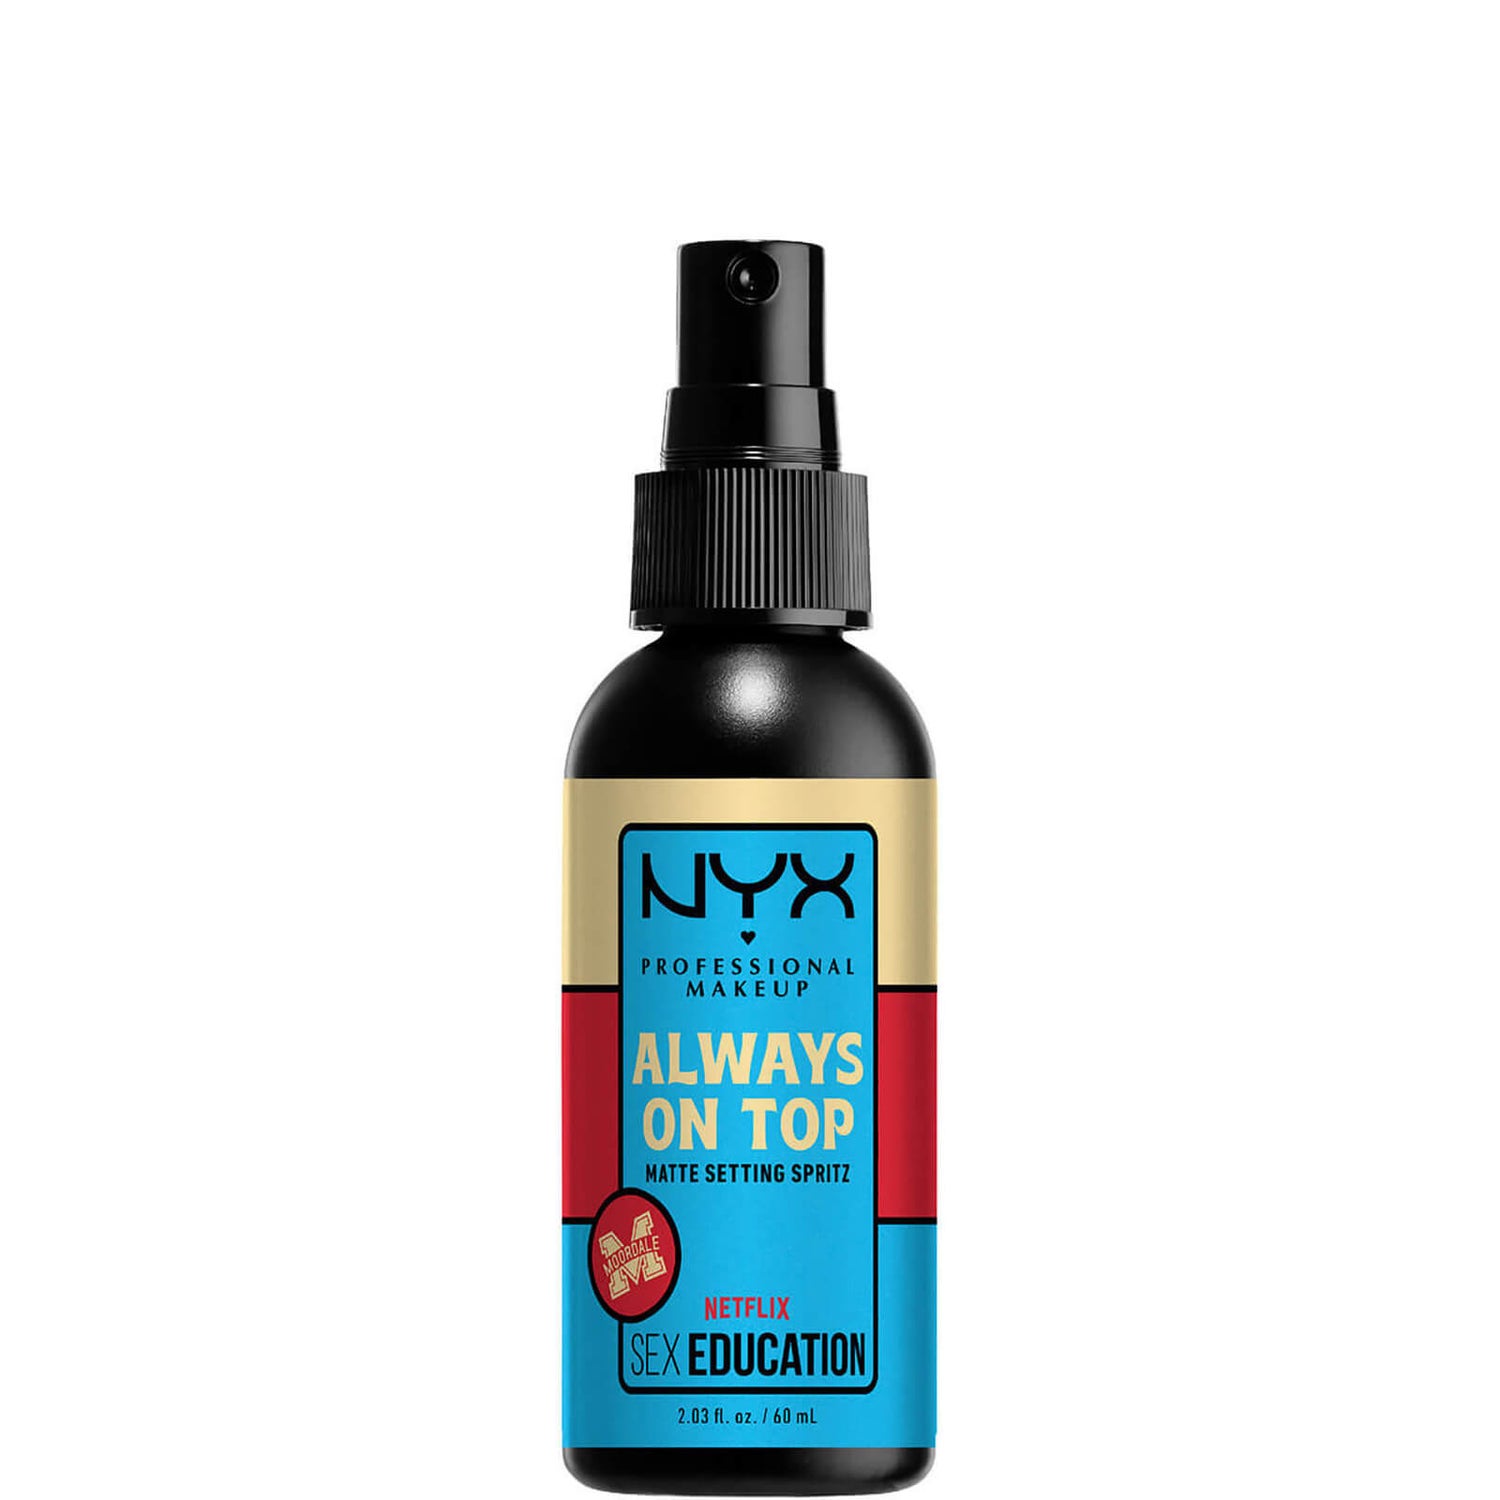 Spray fixateur mat NYX Professional Makeup x Sex Education Netflix en édition limitée - Always On Top